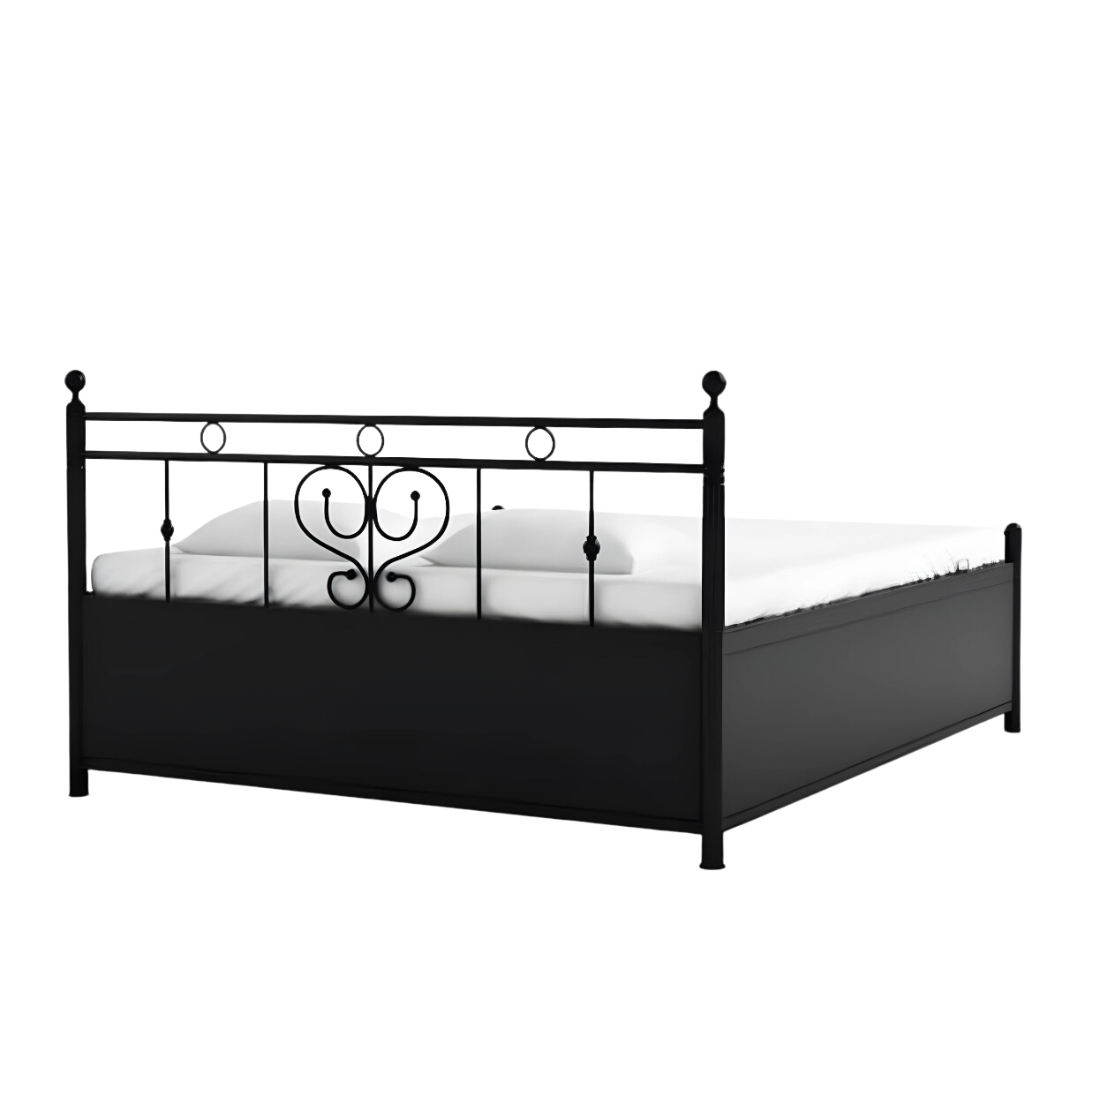 Dustin Hydraulic Storage Single Metal Bed (Color - Black) with Designer Headrest